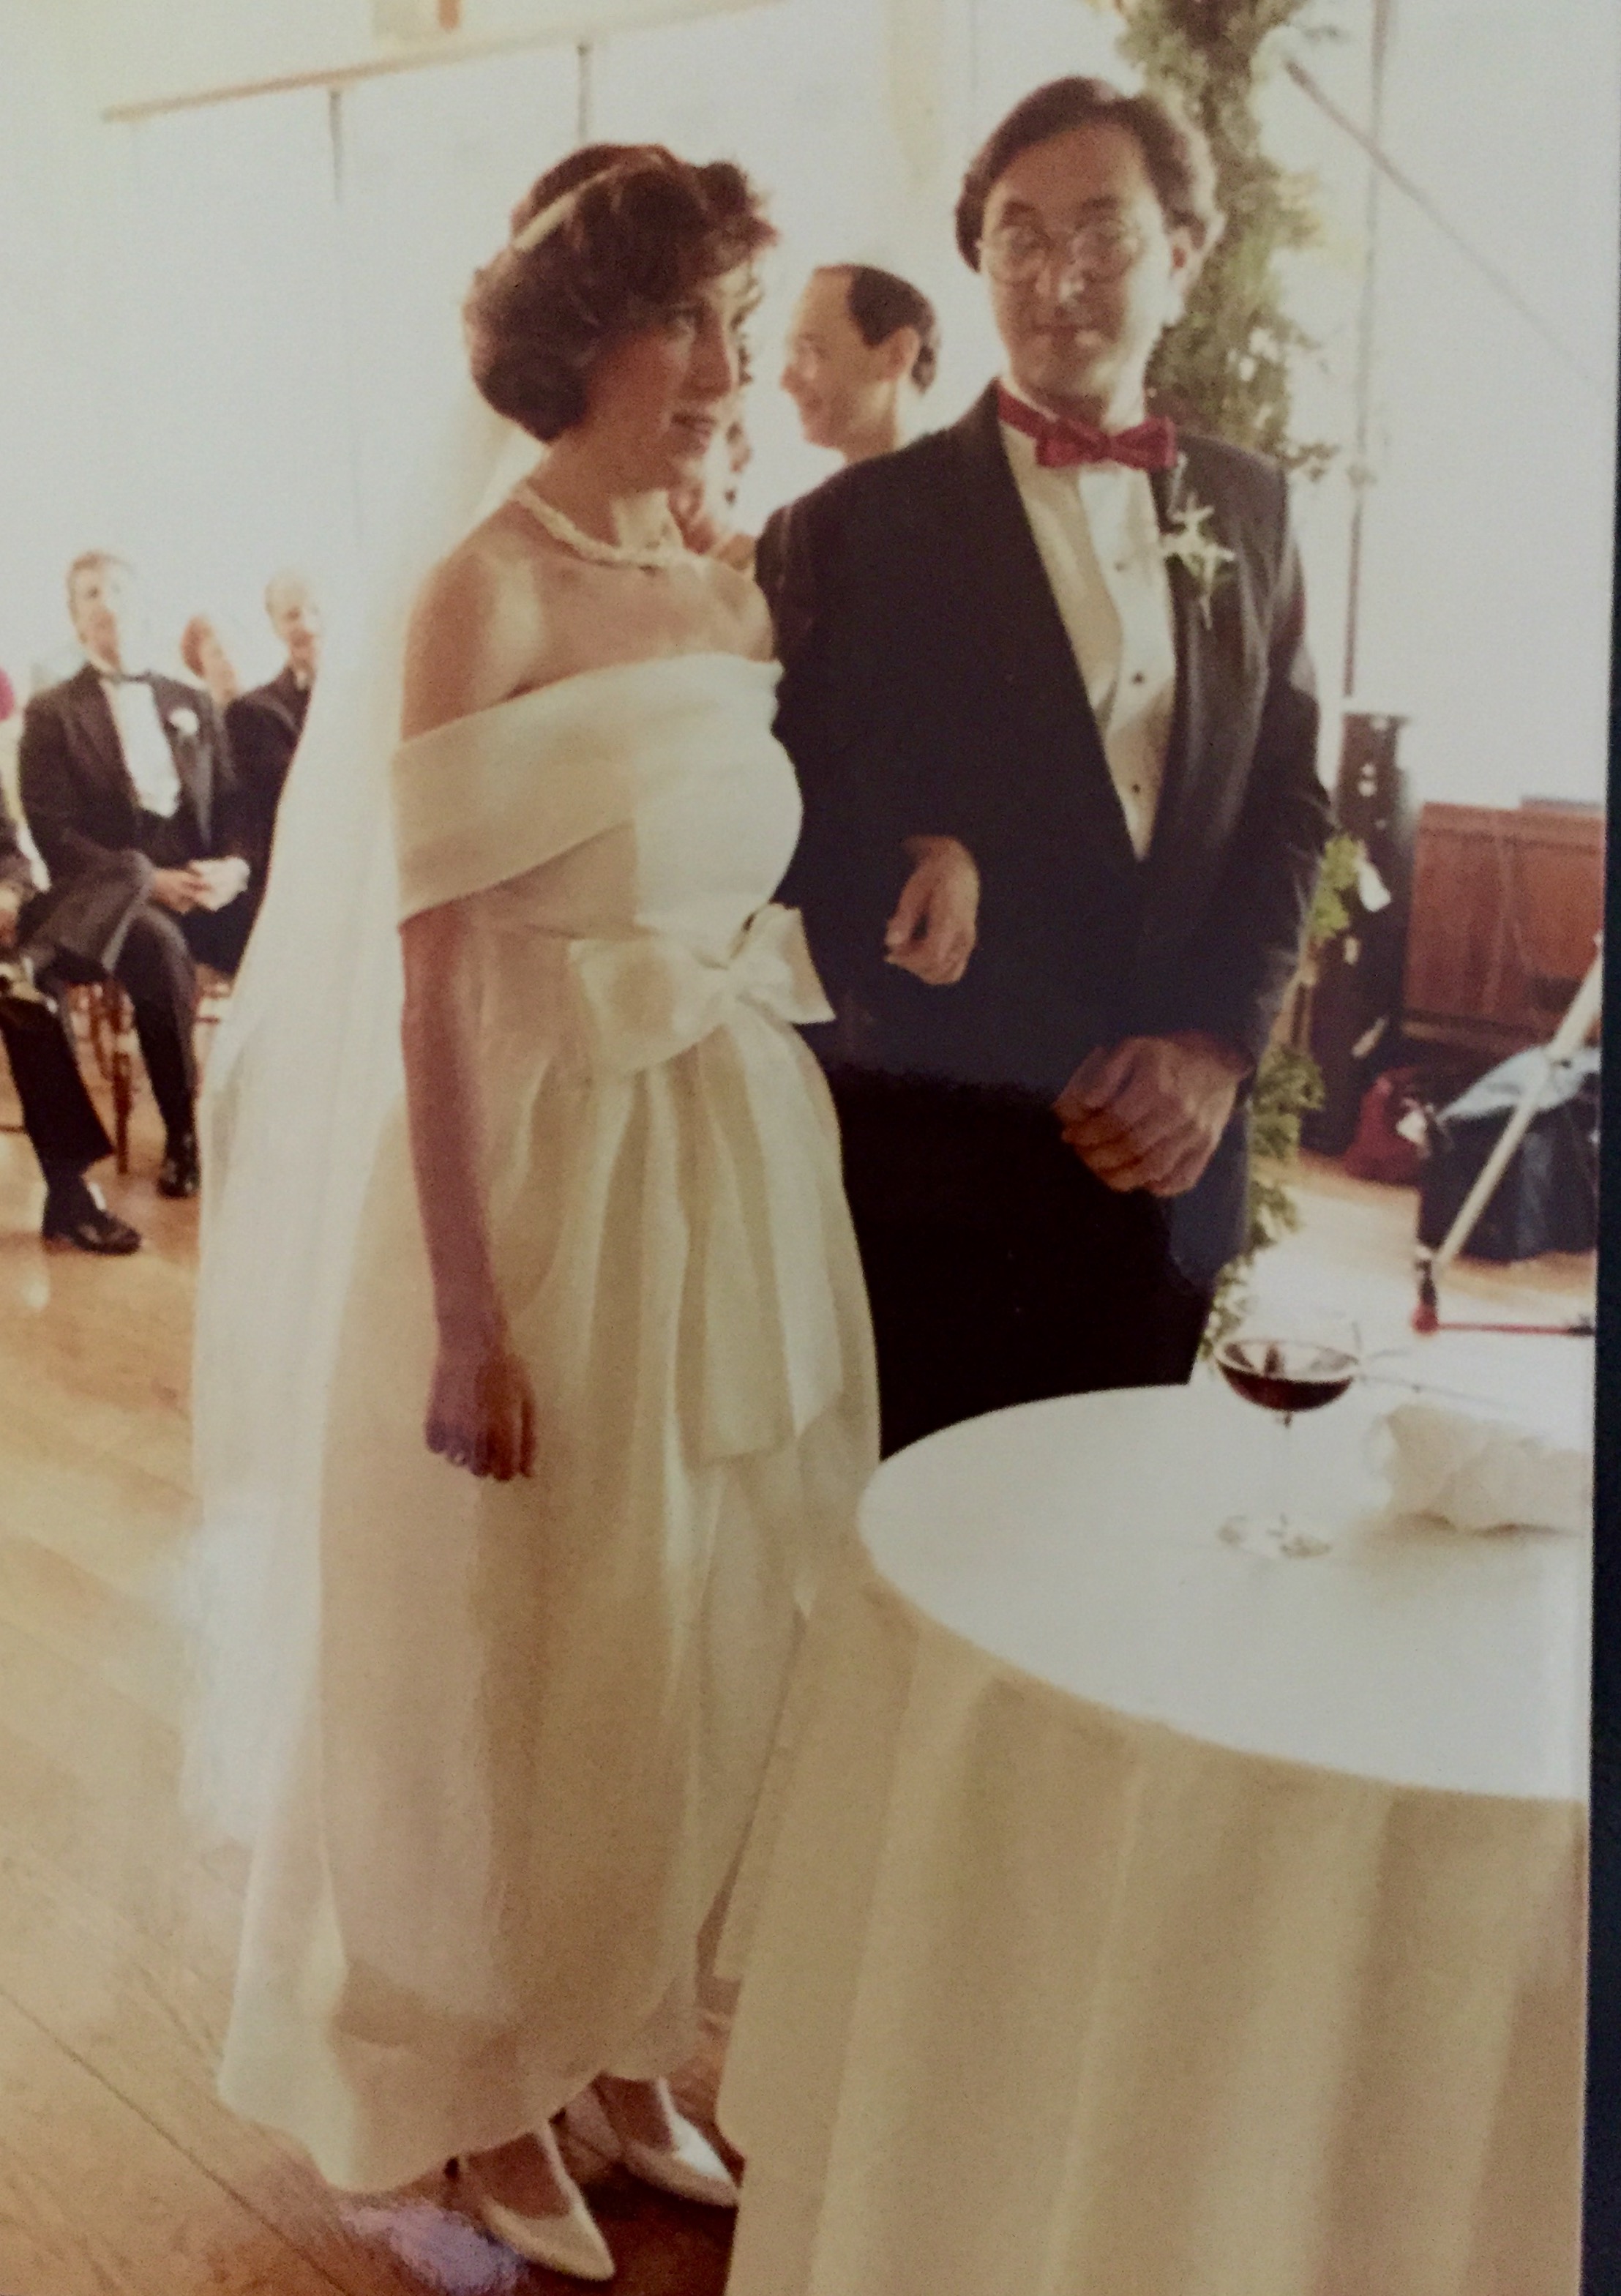 Our wedding ceremony 32 years ago.jpg